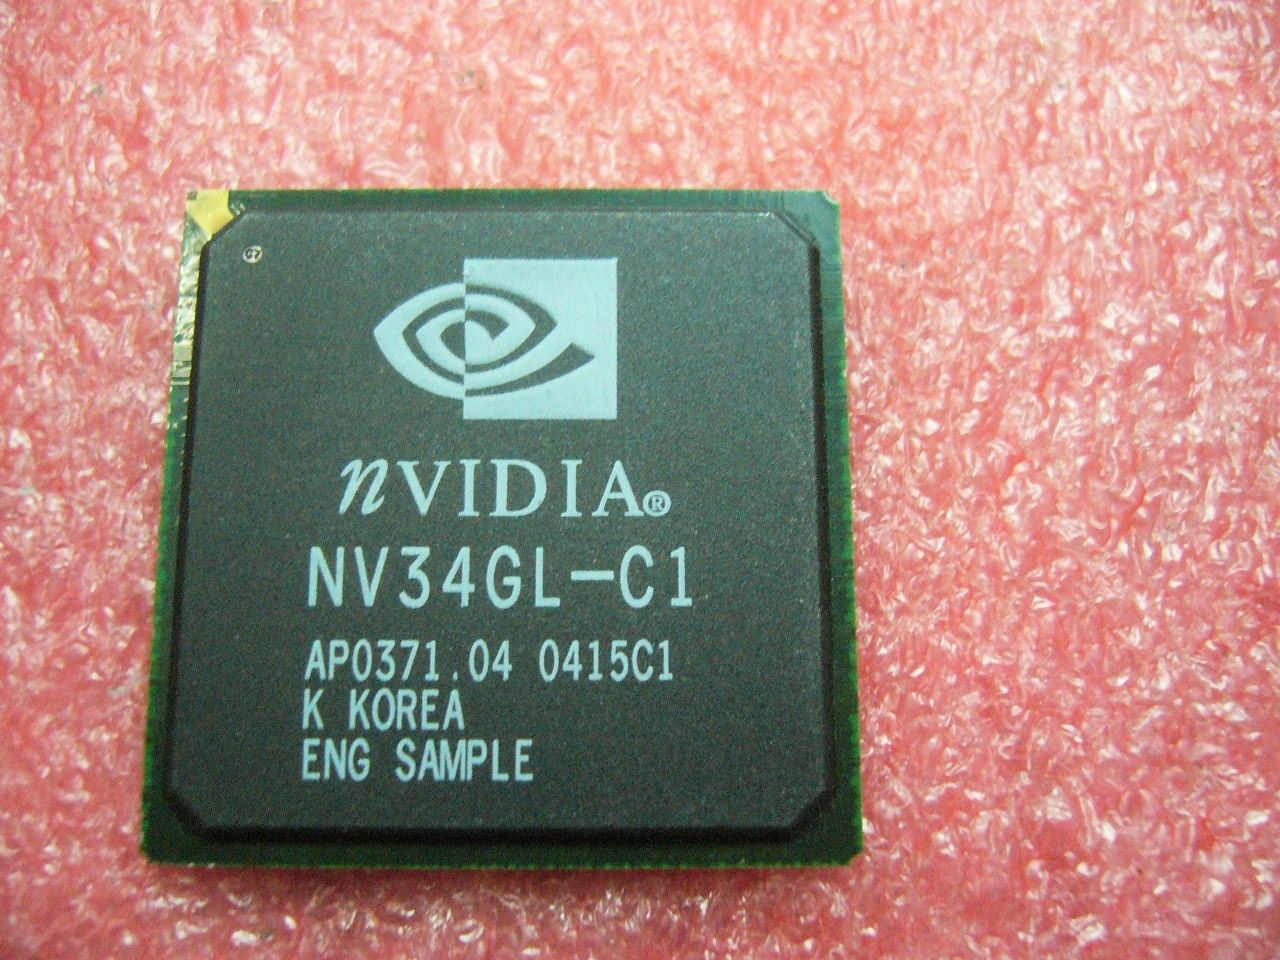 QTY 1x nVidia Geforce GPU NV34GL-C1 Engineering Sample Version